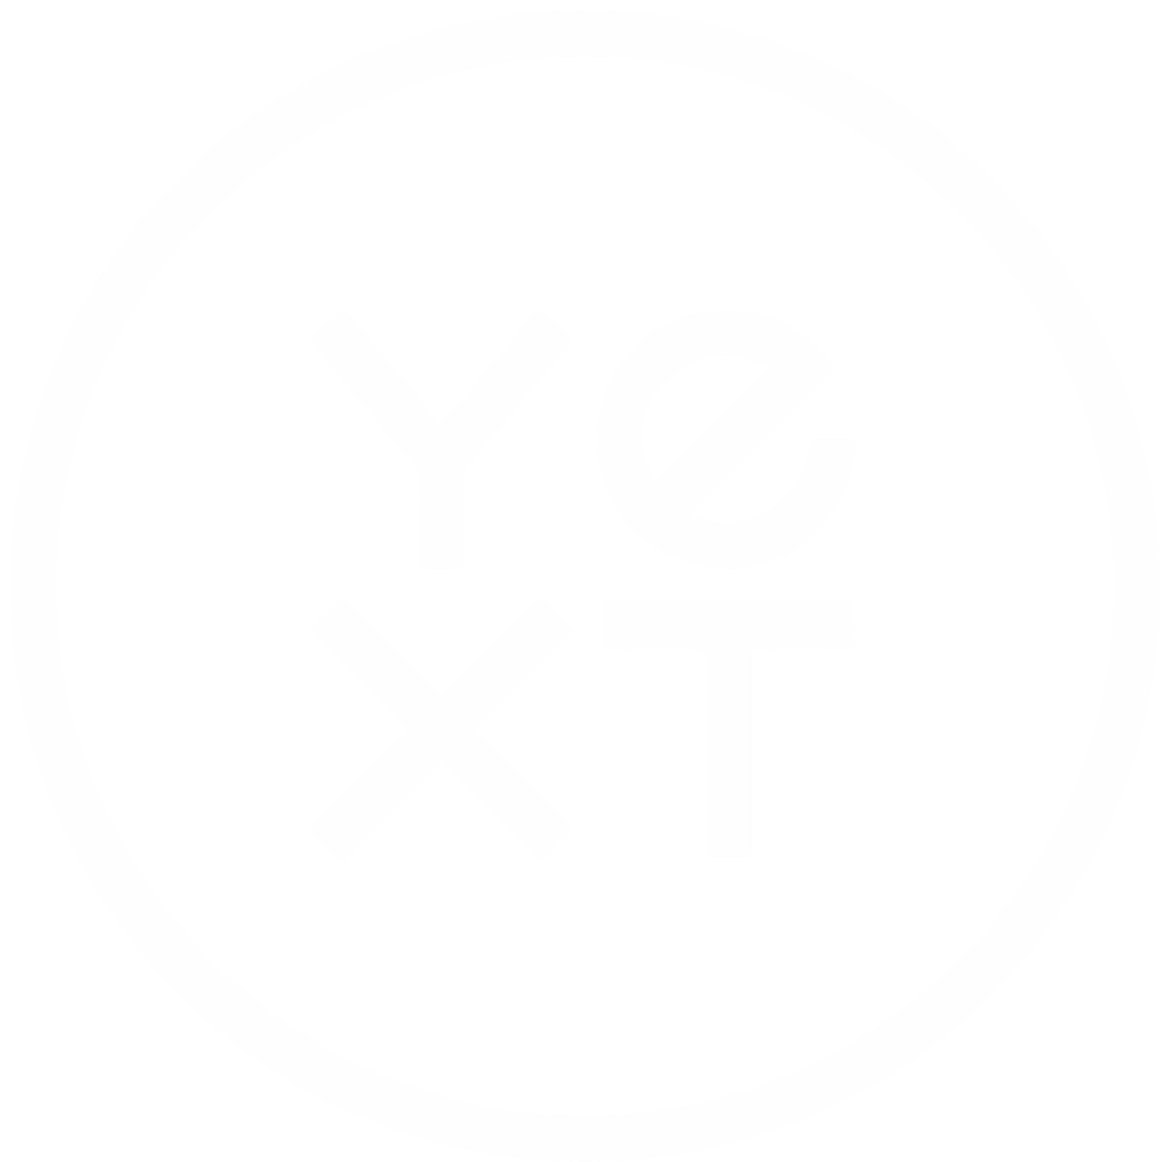 yext